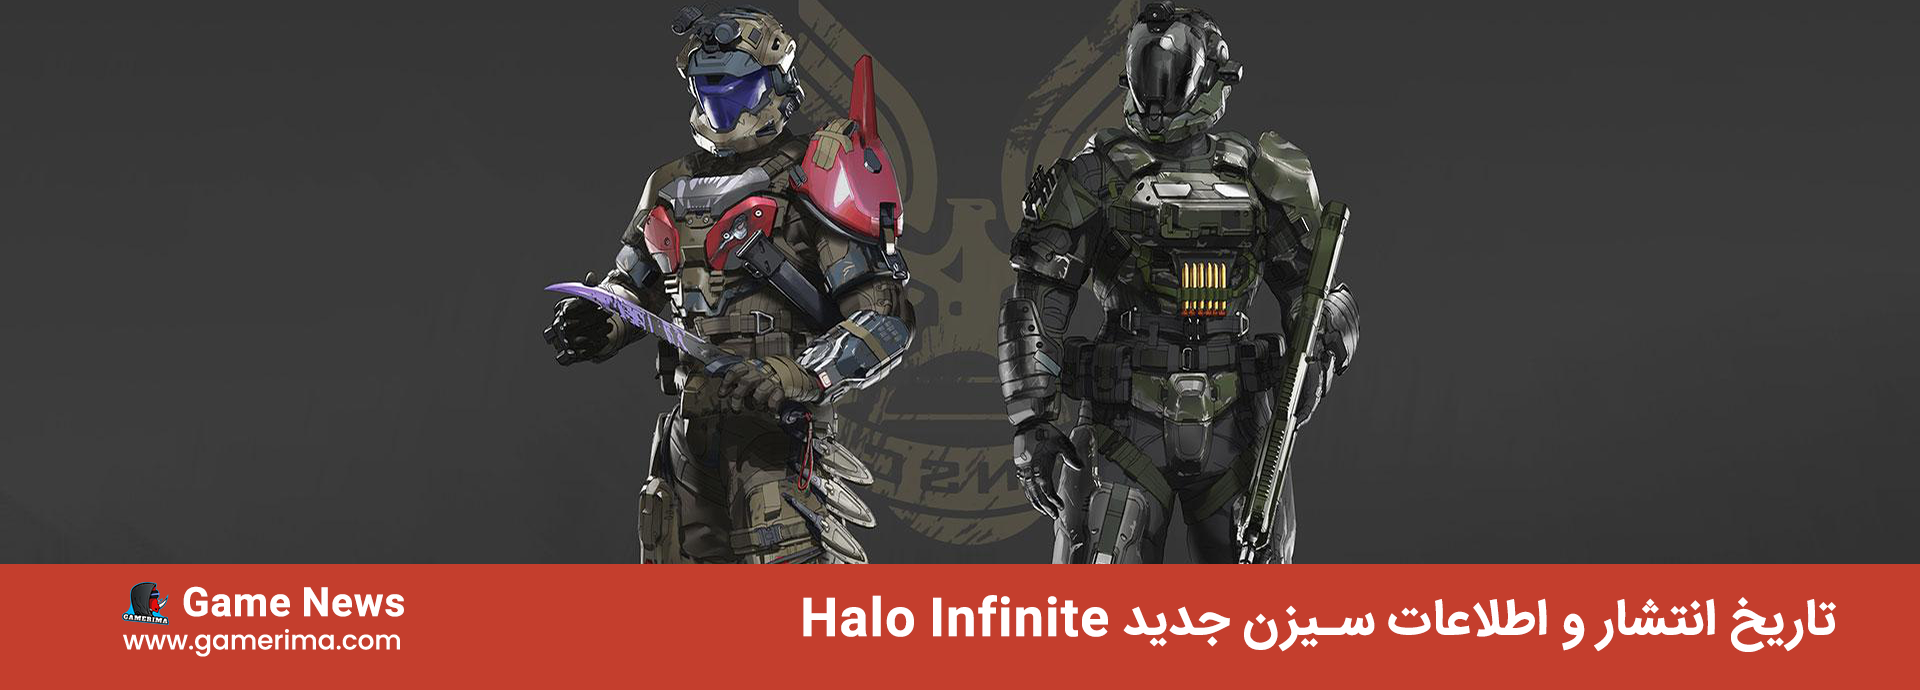 Halo Infinite Season 2 تاریخ انتشار و اطلاعات جدید